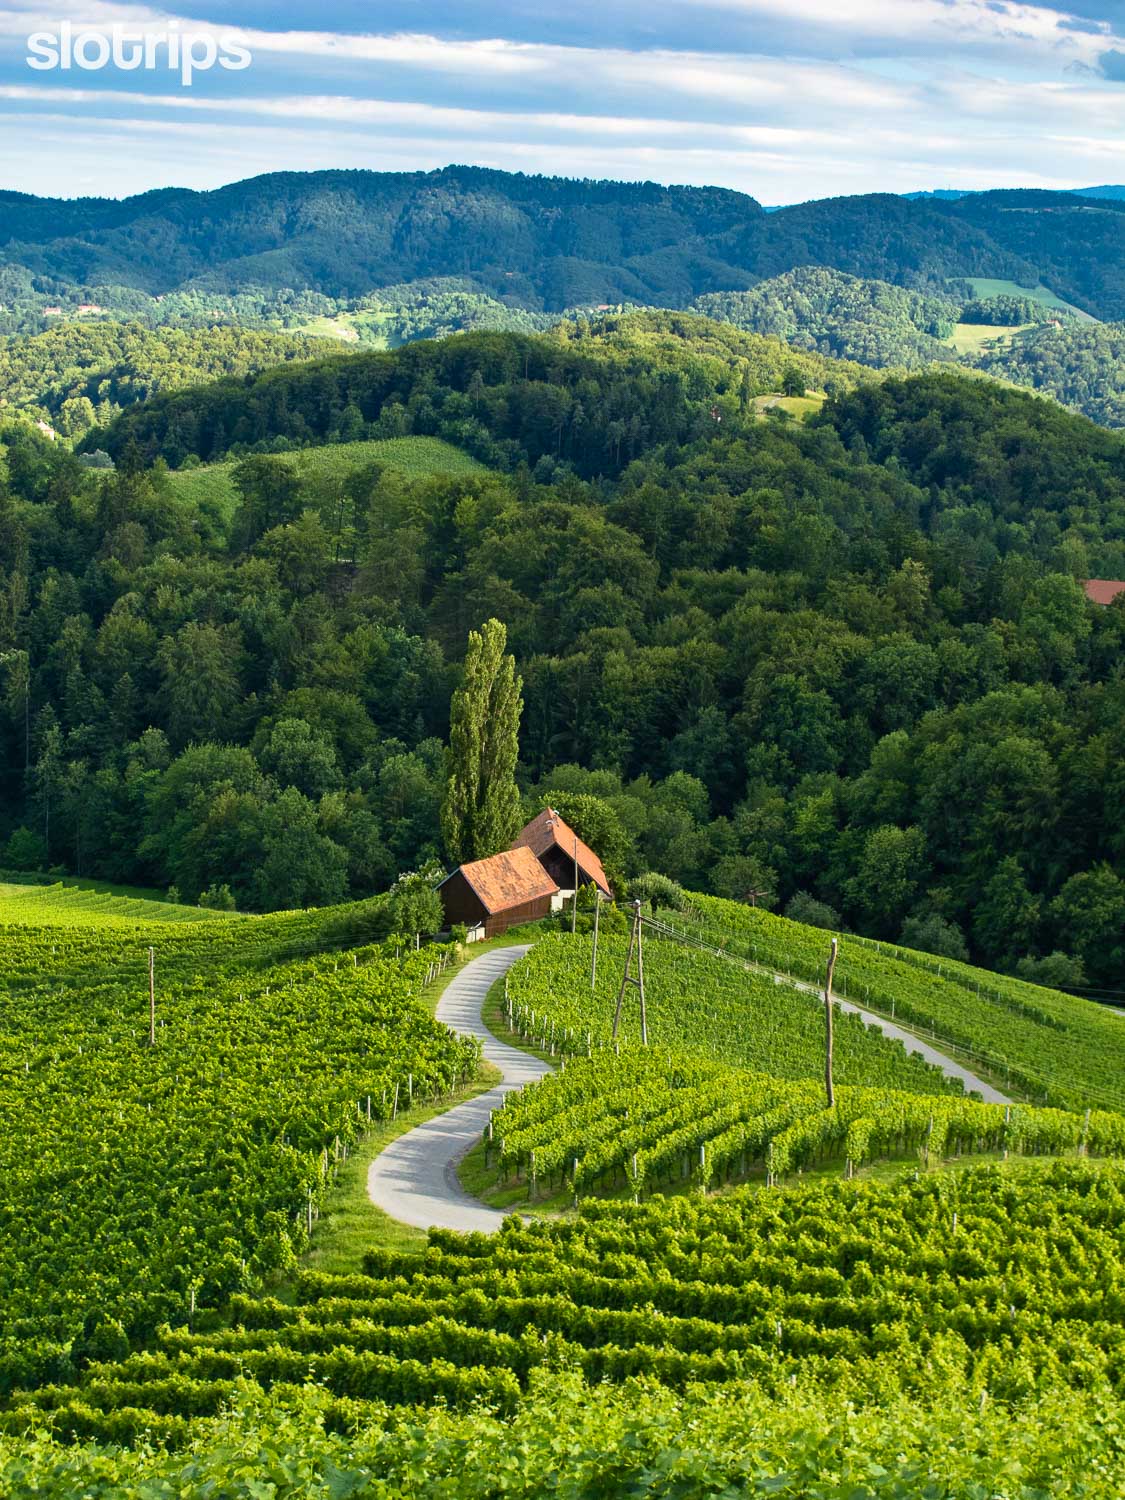 The famous heart vine road in the vineyards as seen from Dreisiebner homestead in Styria region in Slovenia